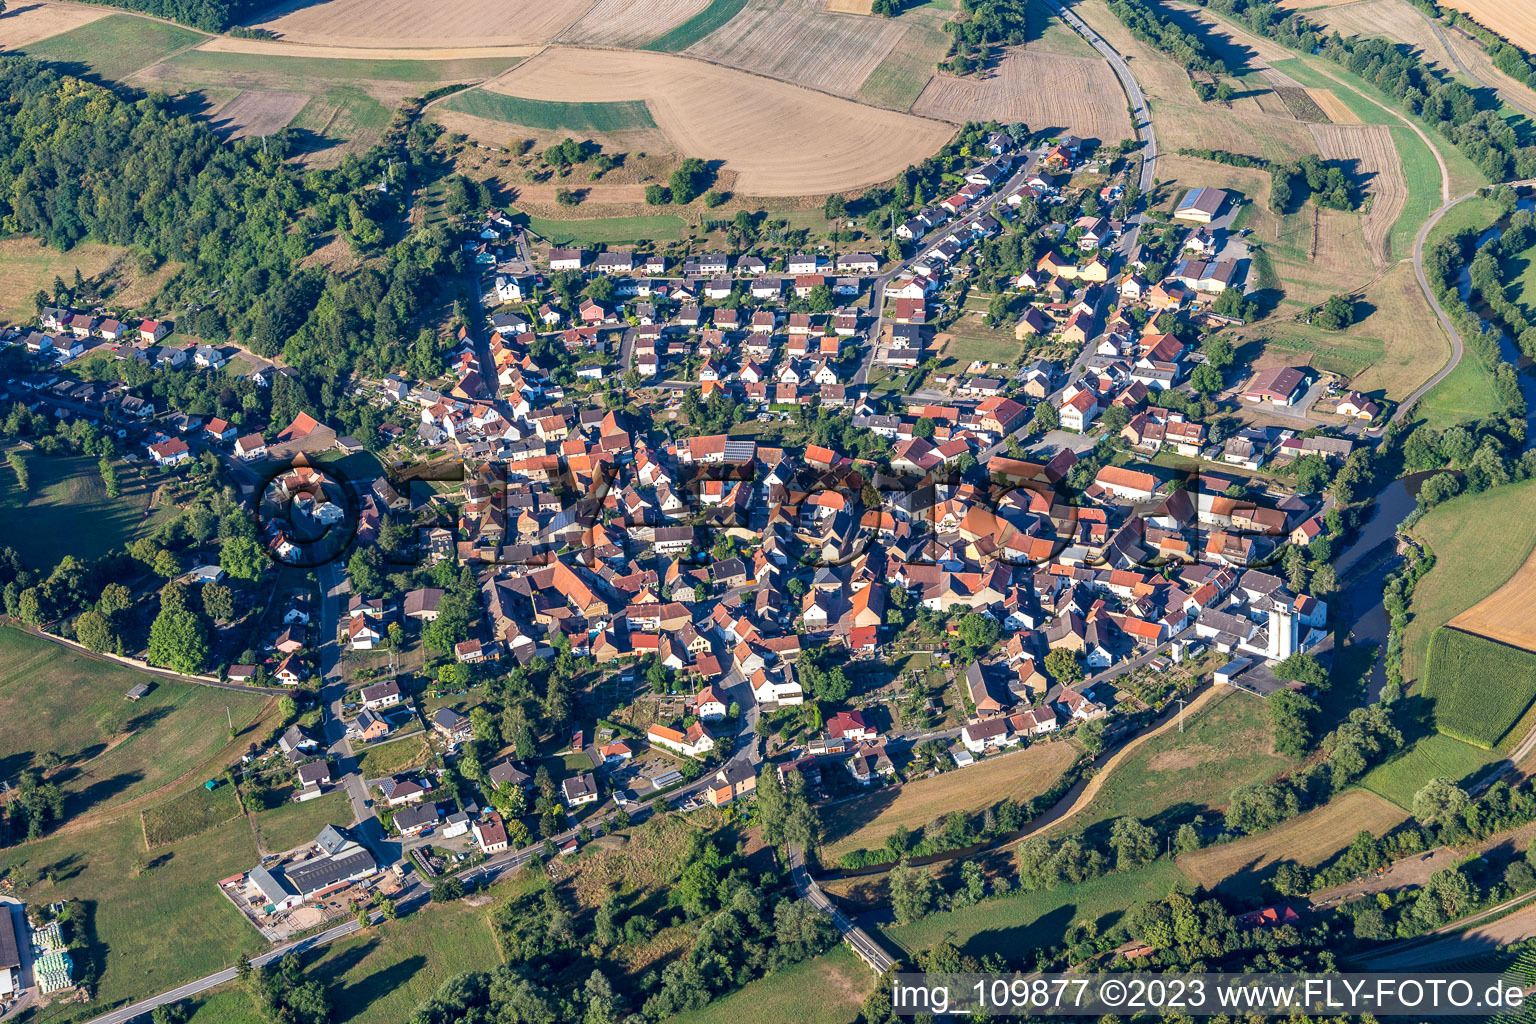 Rehborn in the state Rhineland-Palatinate, Germany